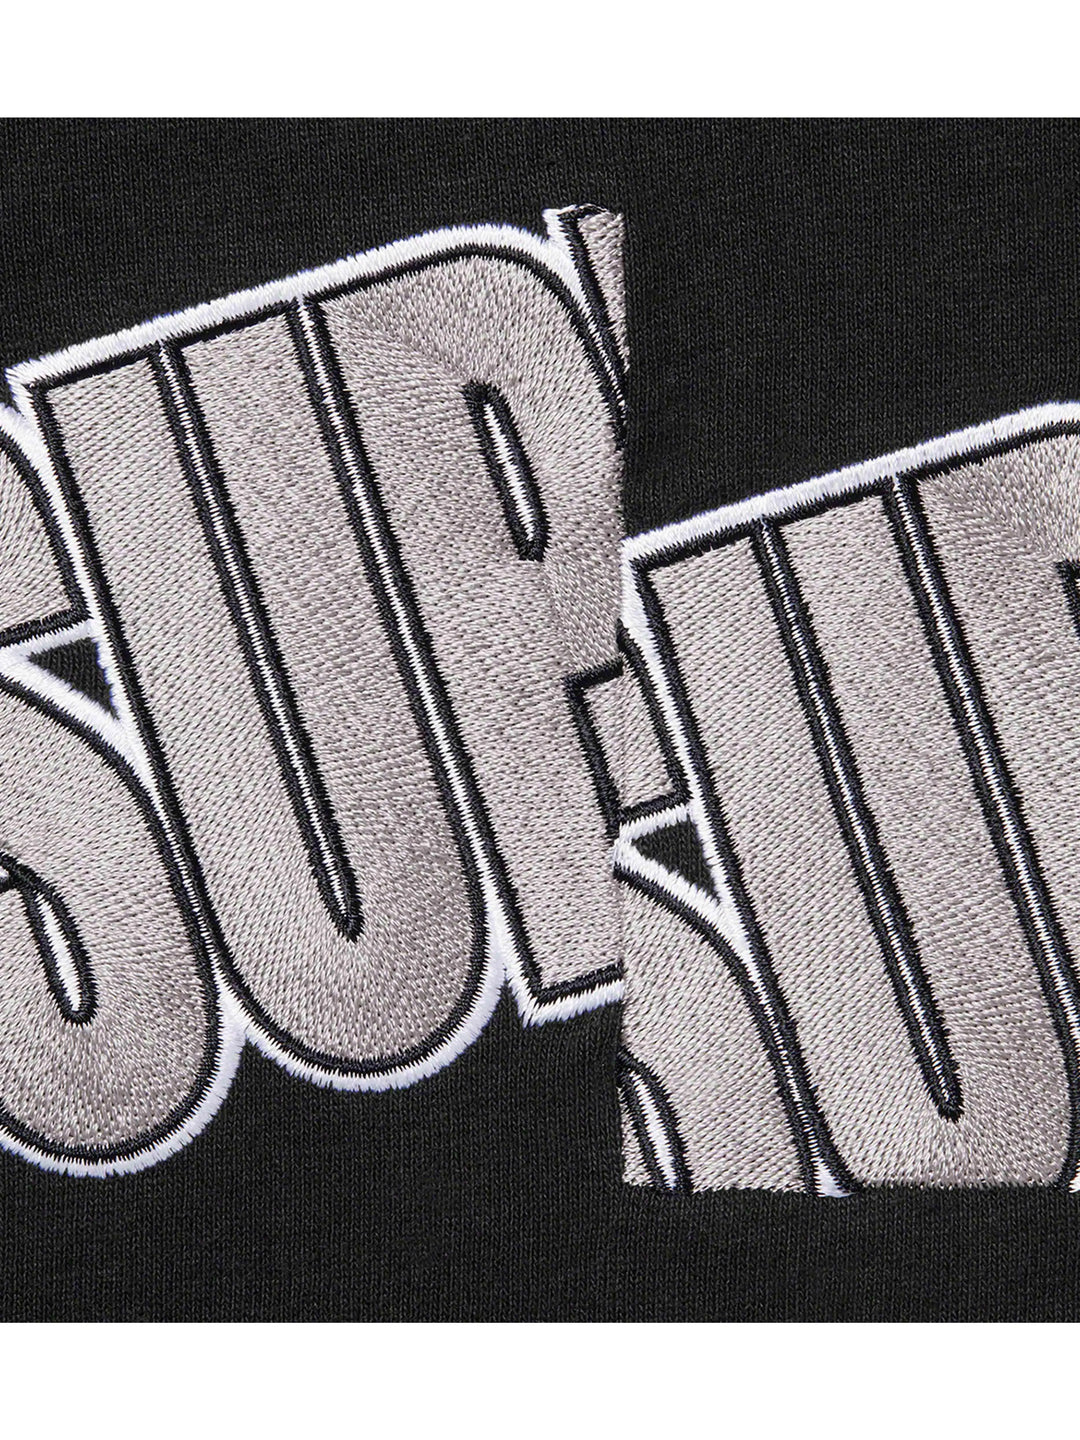 Supreme Cut Logo S/S Top Black [SS21] Prior